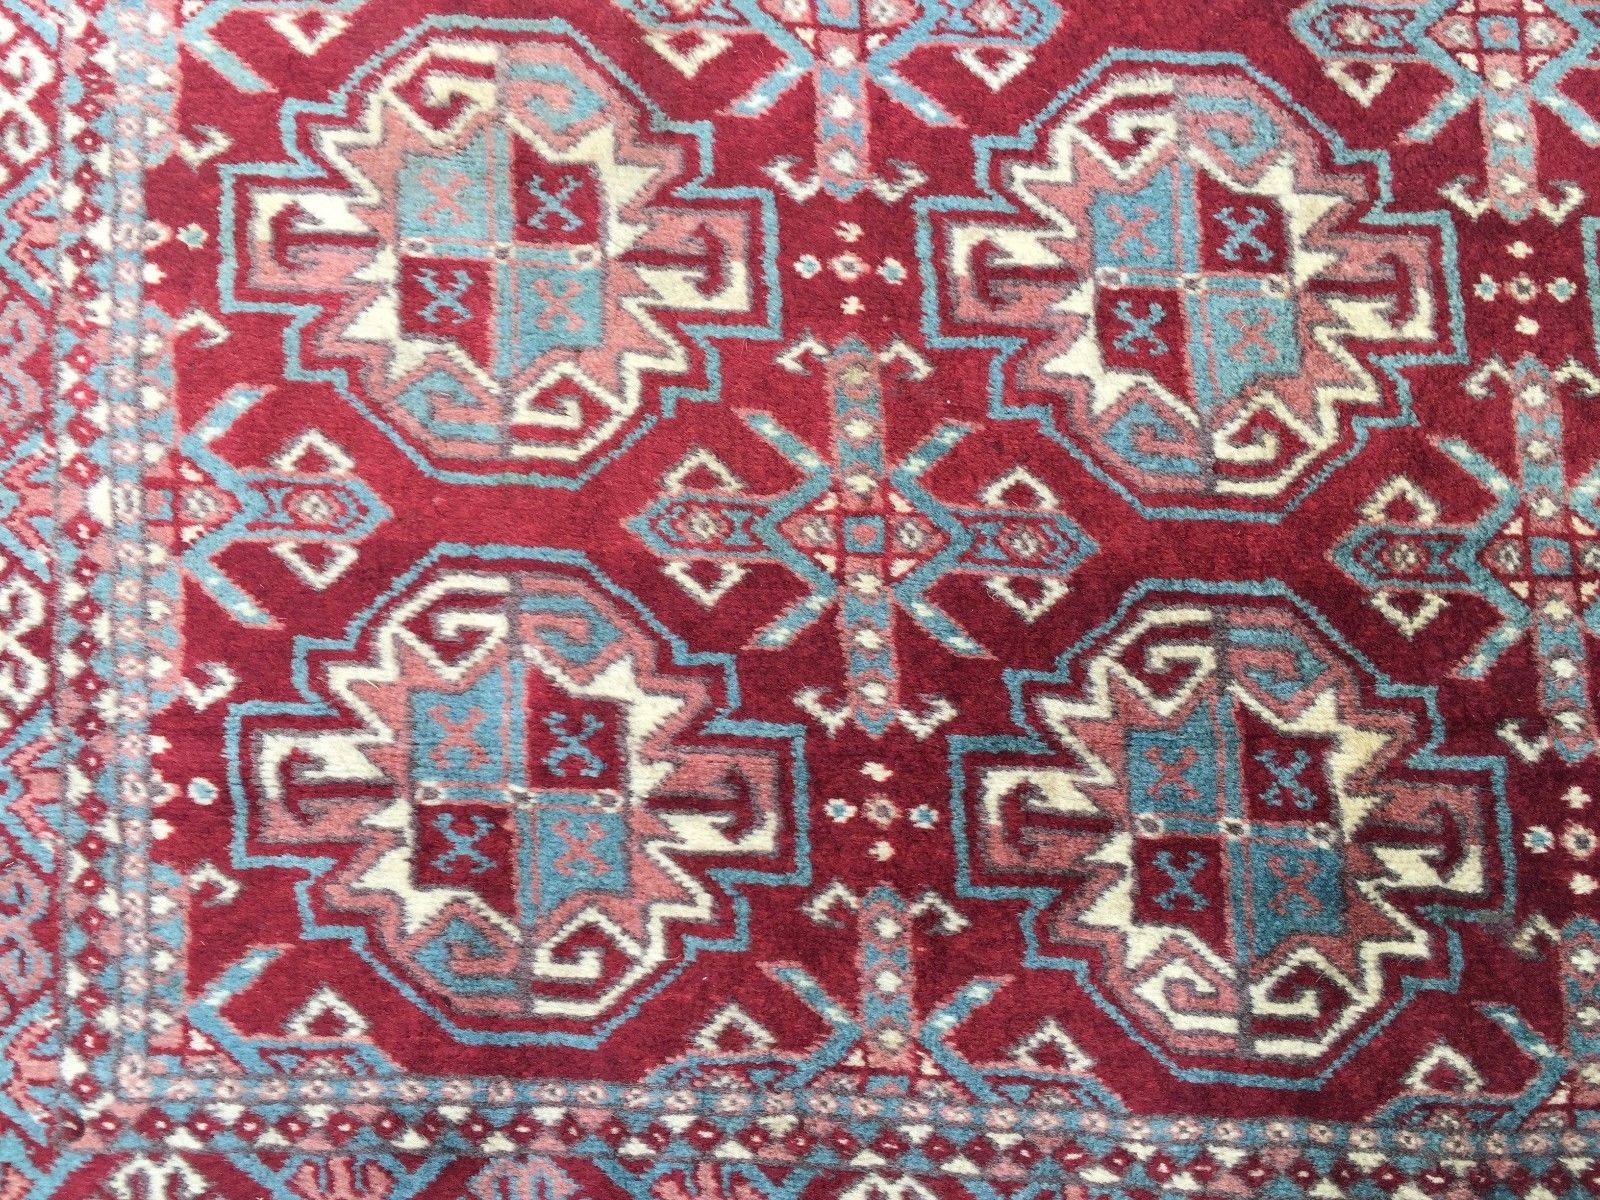 Turkish Vintage double sided Rug vegetable dye 175x132cm Persian Tribal boho old Antiques:Carpets & Rugs kilimshop.myshopify.com